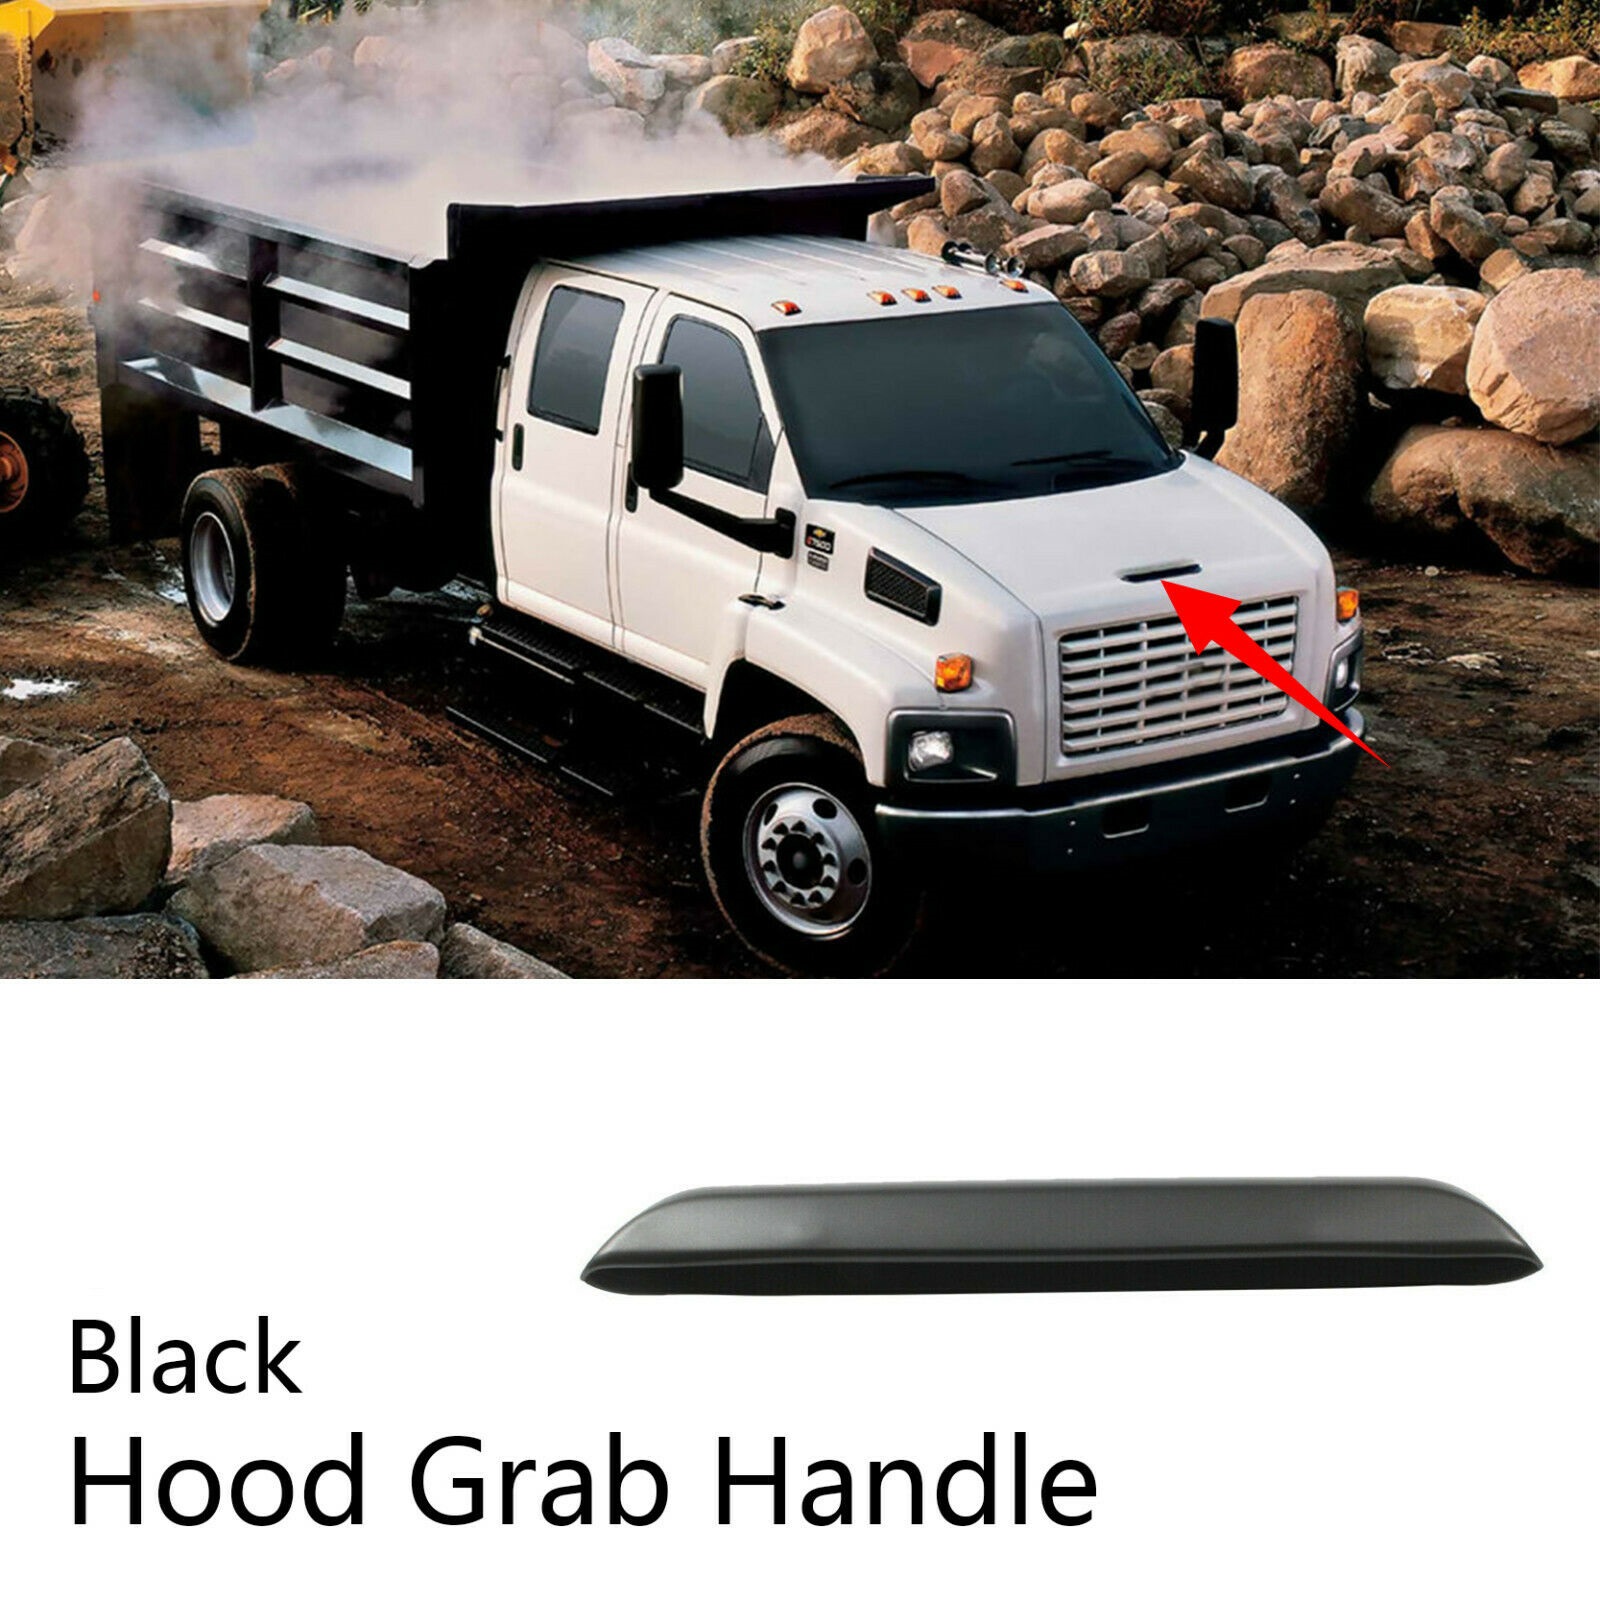 RLB-HILON Front Hood Handle Grab Compatible with Chevrolet Kodiak GMC Topkick C4500 C5500 C6500 2003-2009 Year Replaces OEM 15814272 Chrome Color 